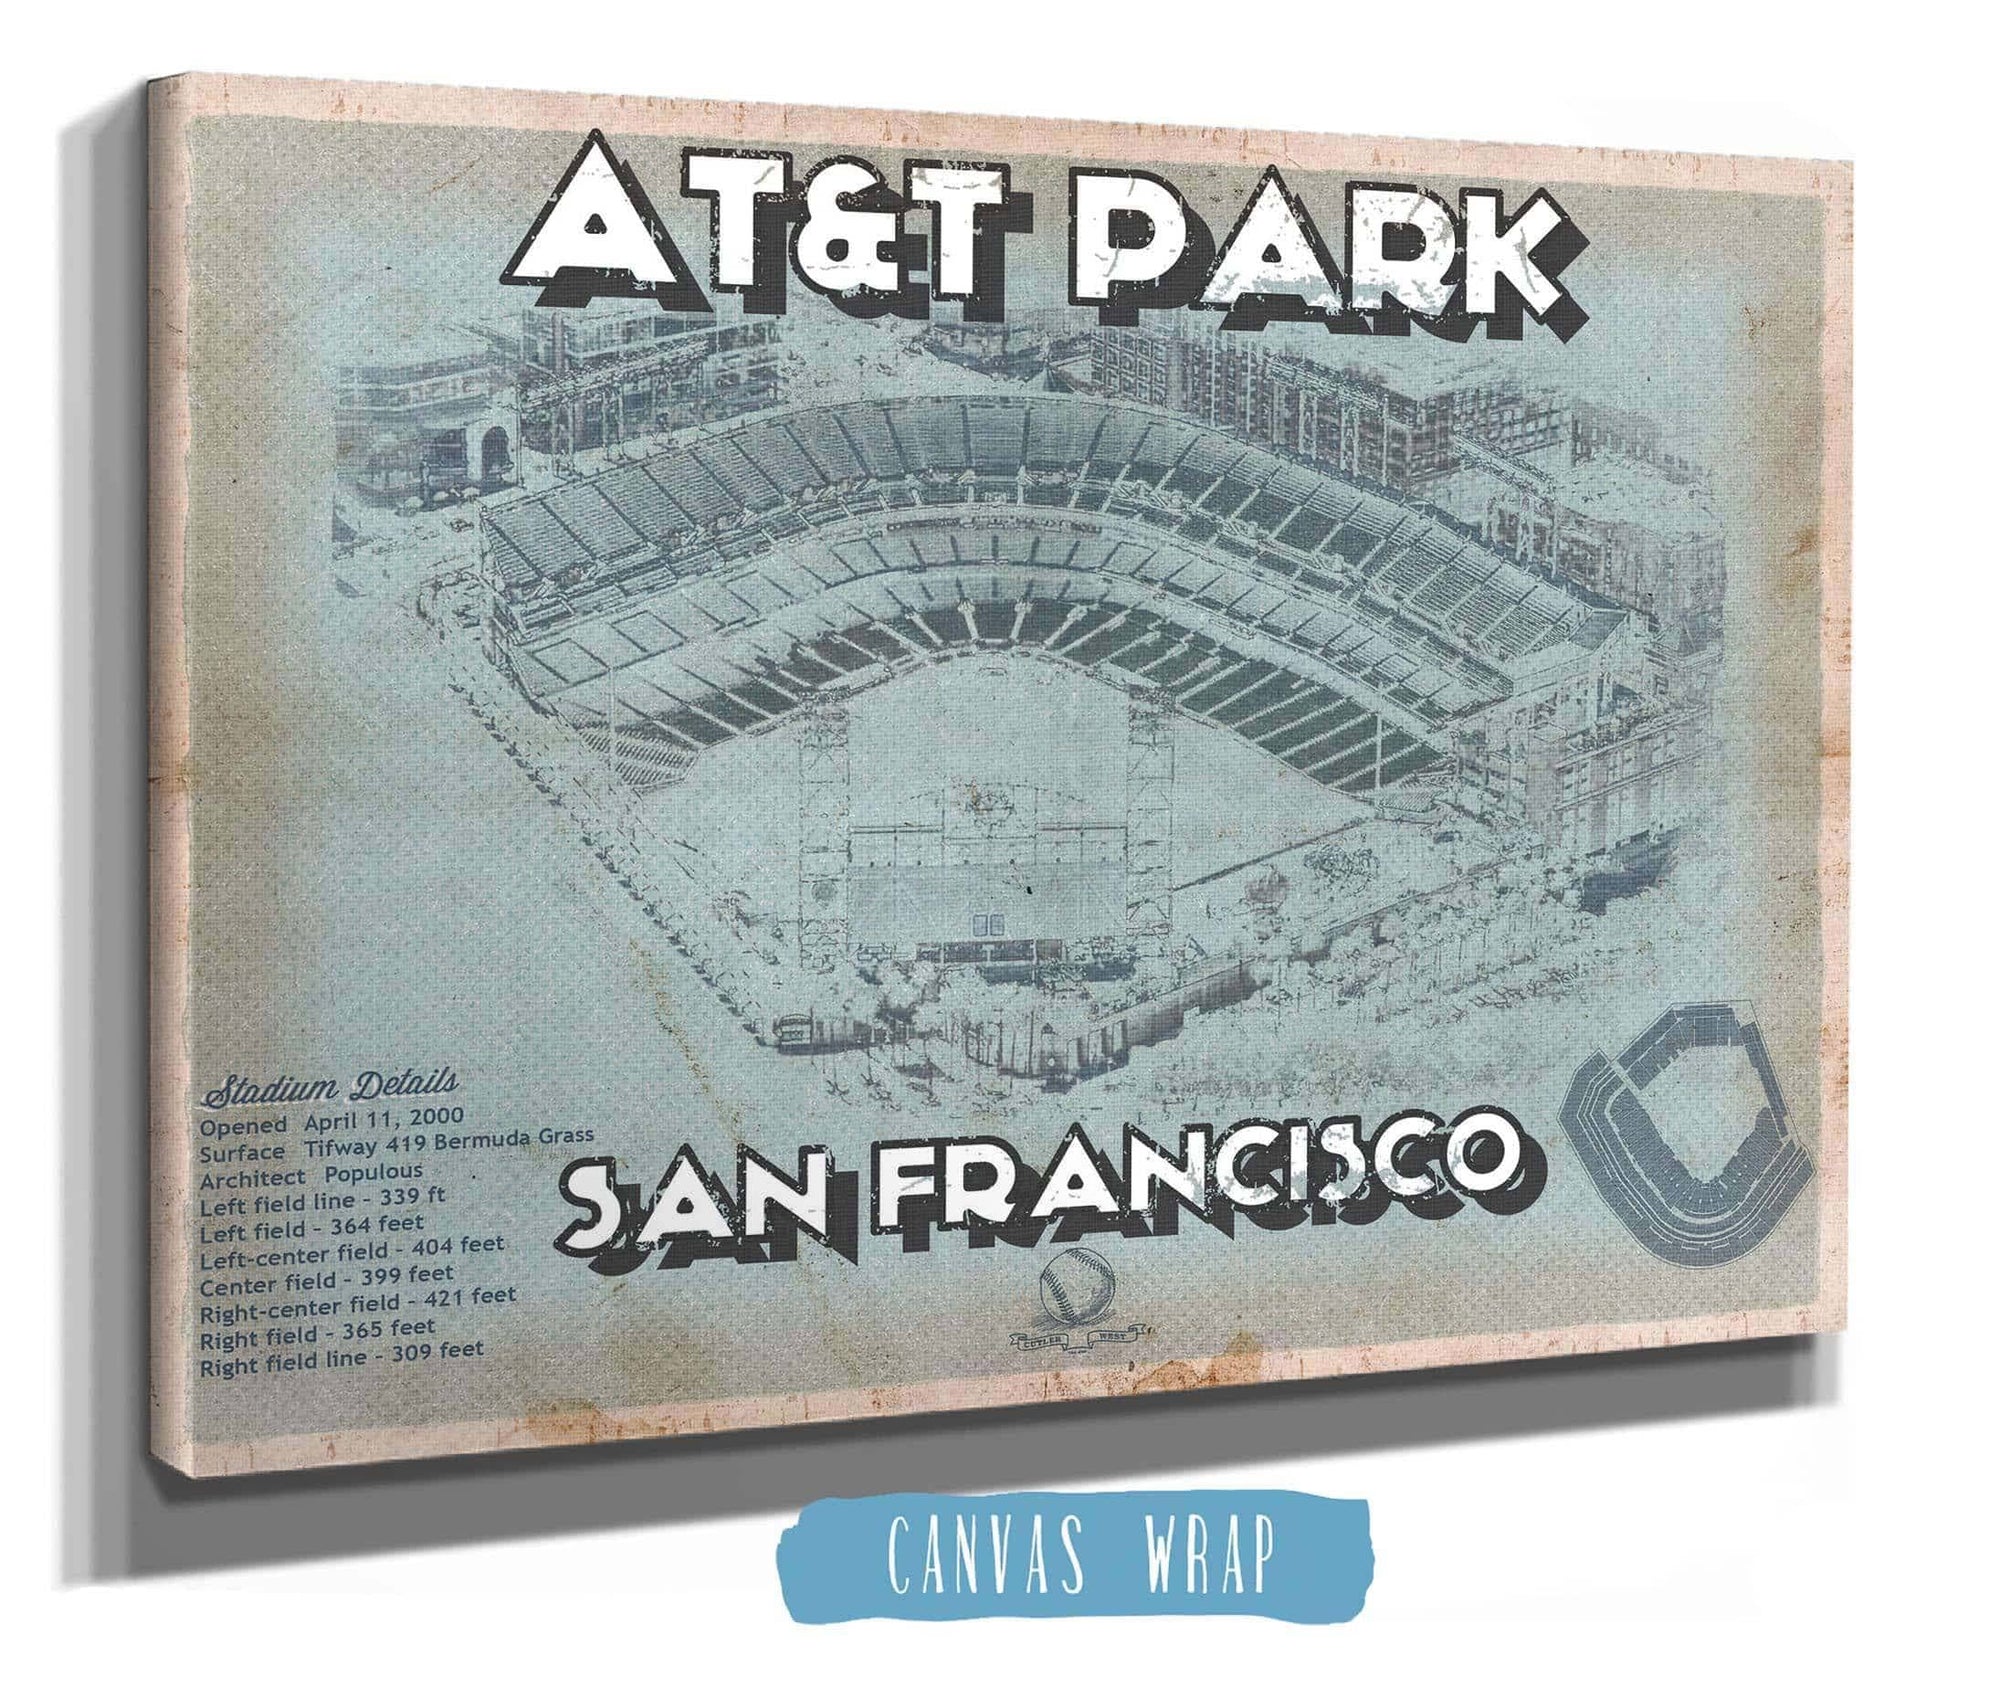 Cutler West Baseball Collection San Francisco Giants - AT&T Park Vintage Baseball Print